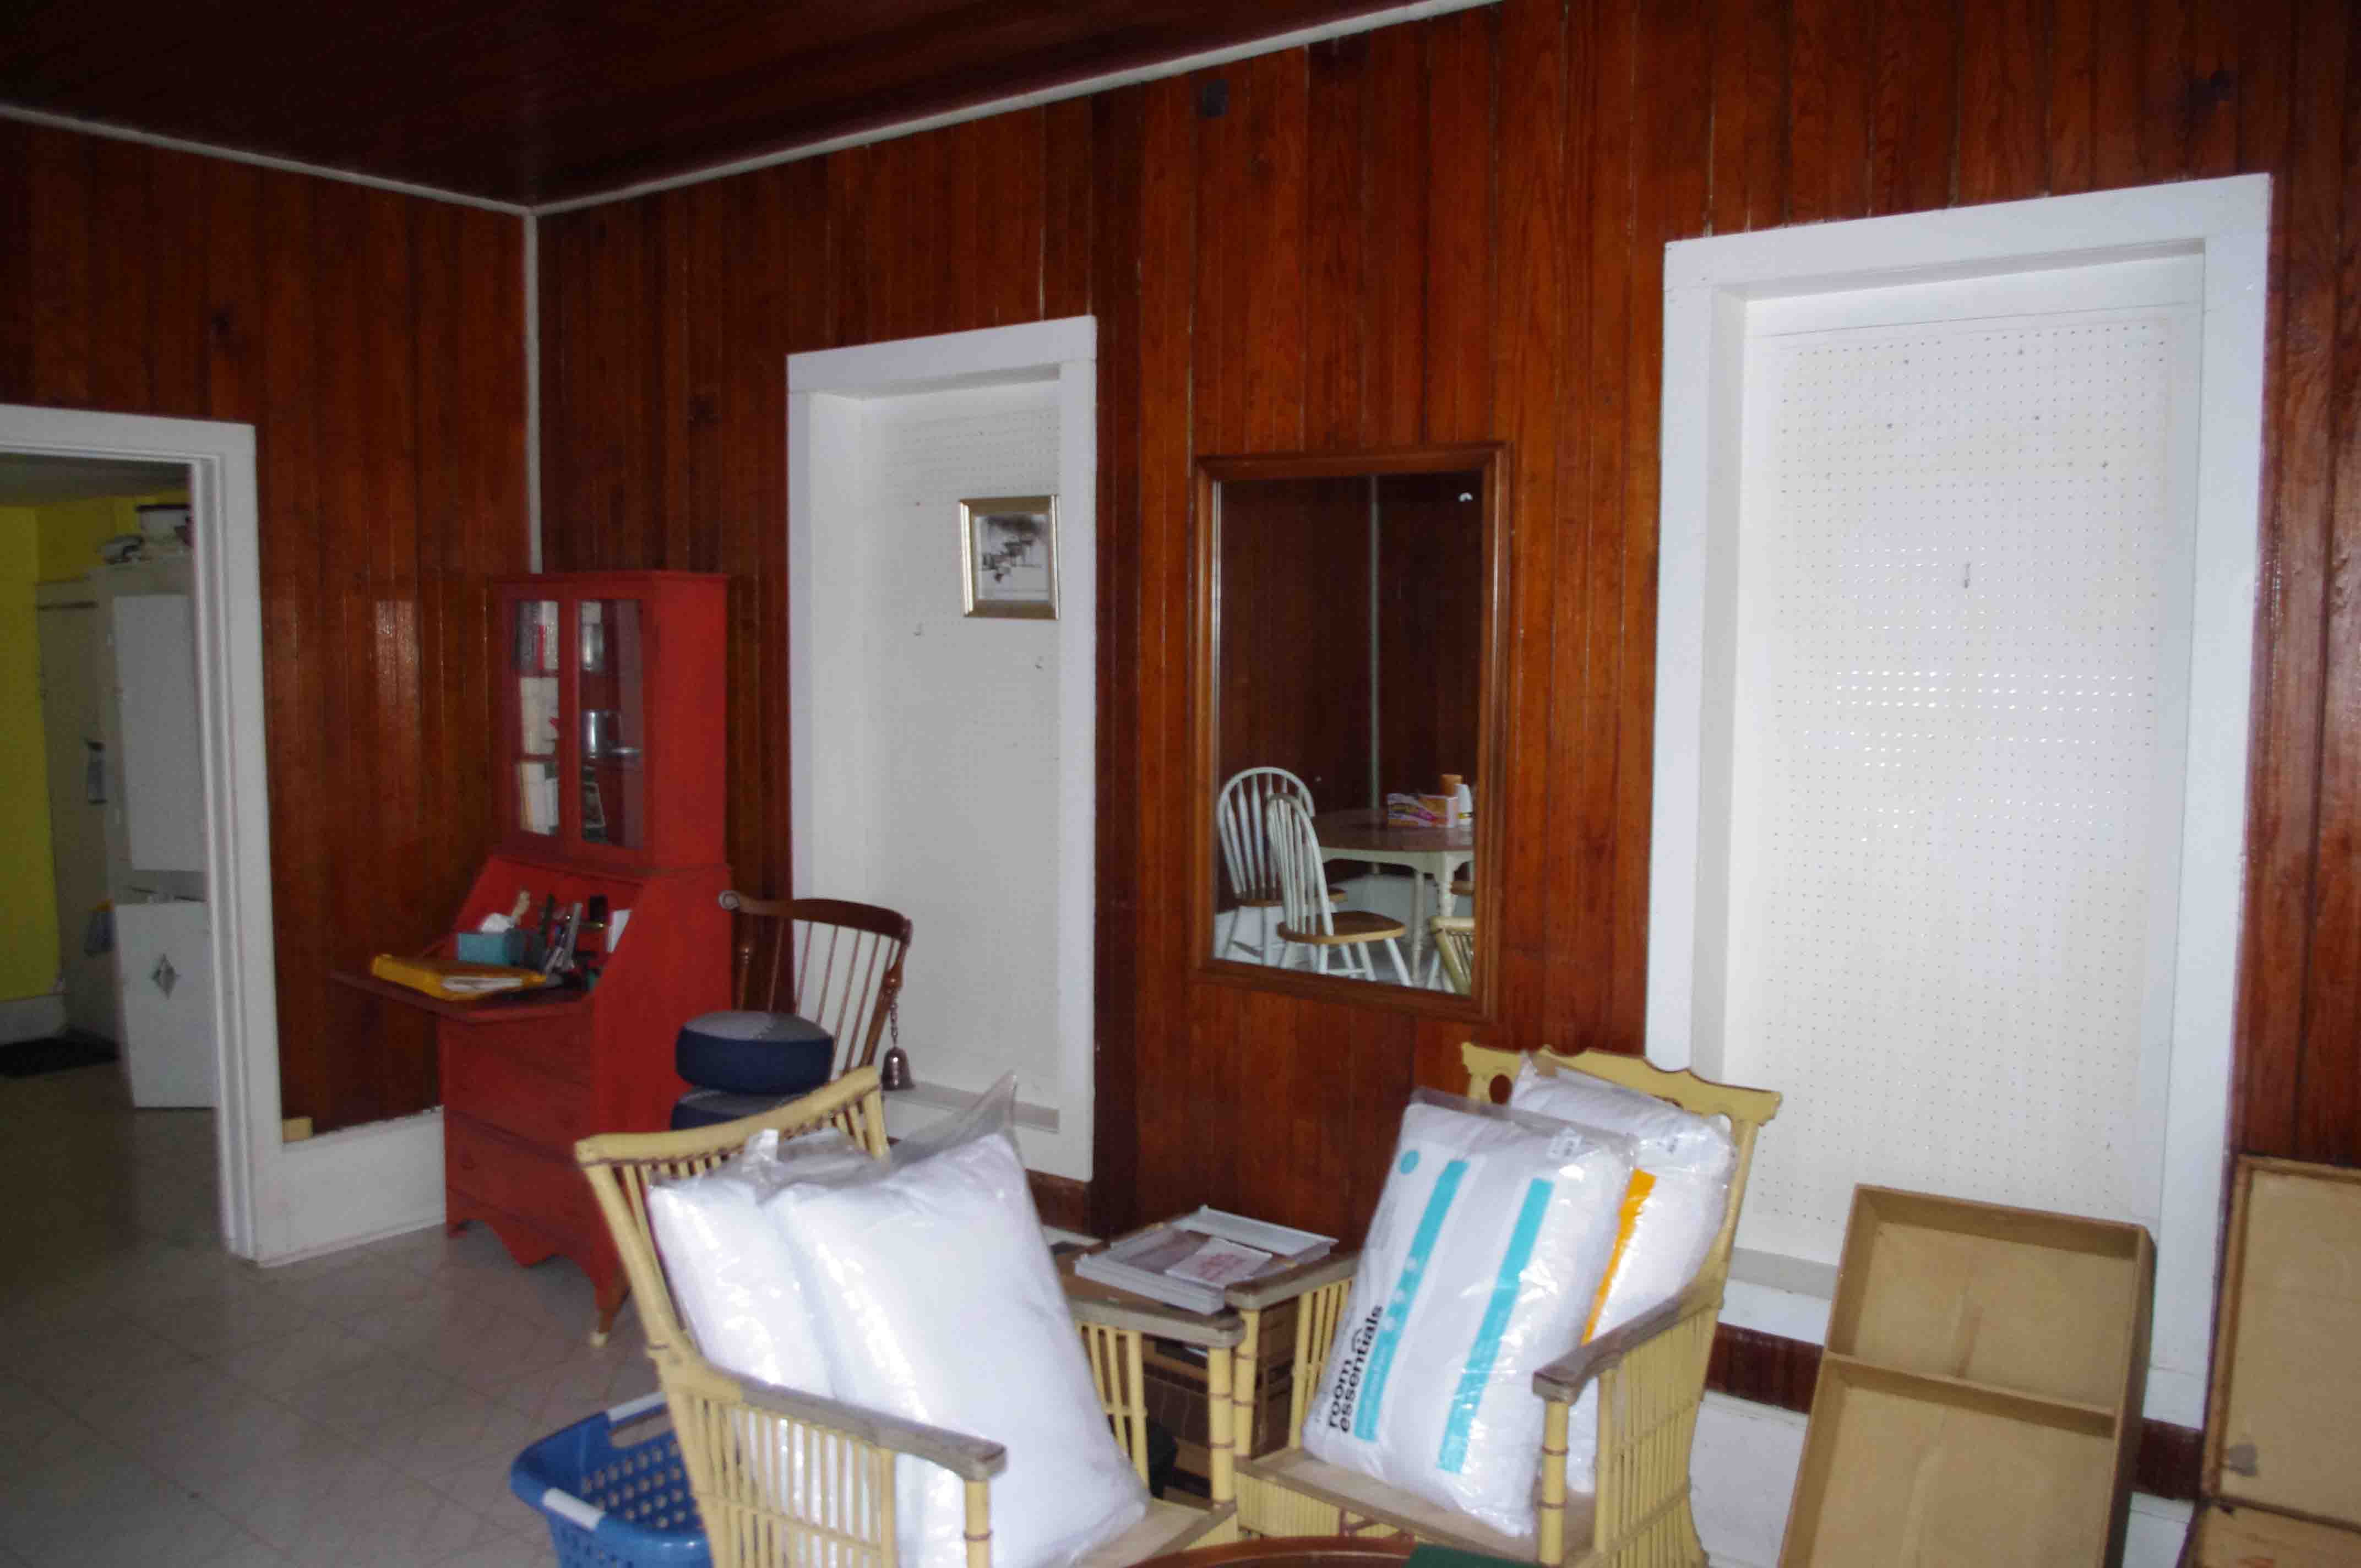 cabin renovation befores - stemm cottage before (14)